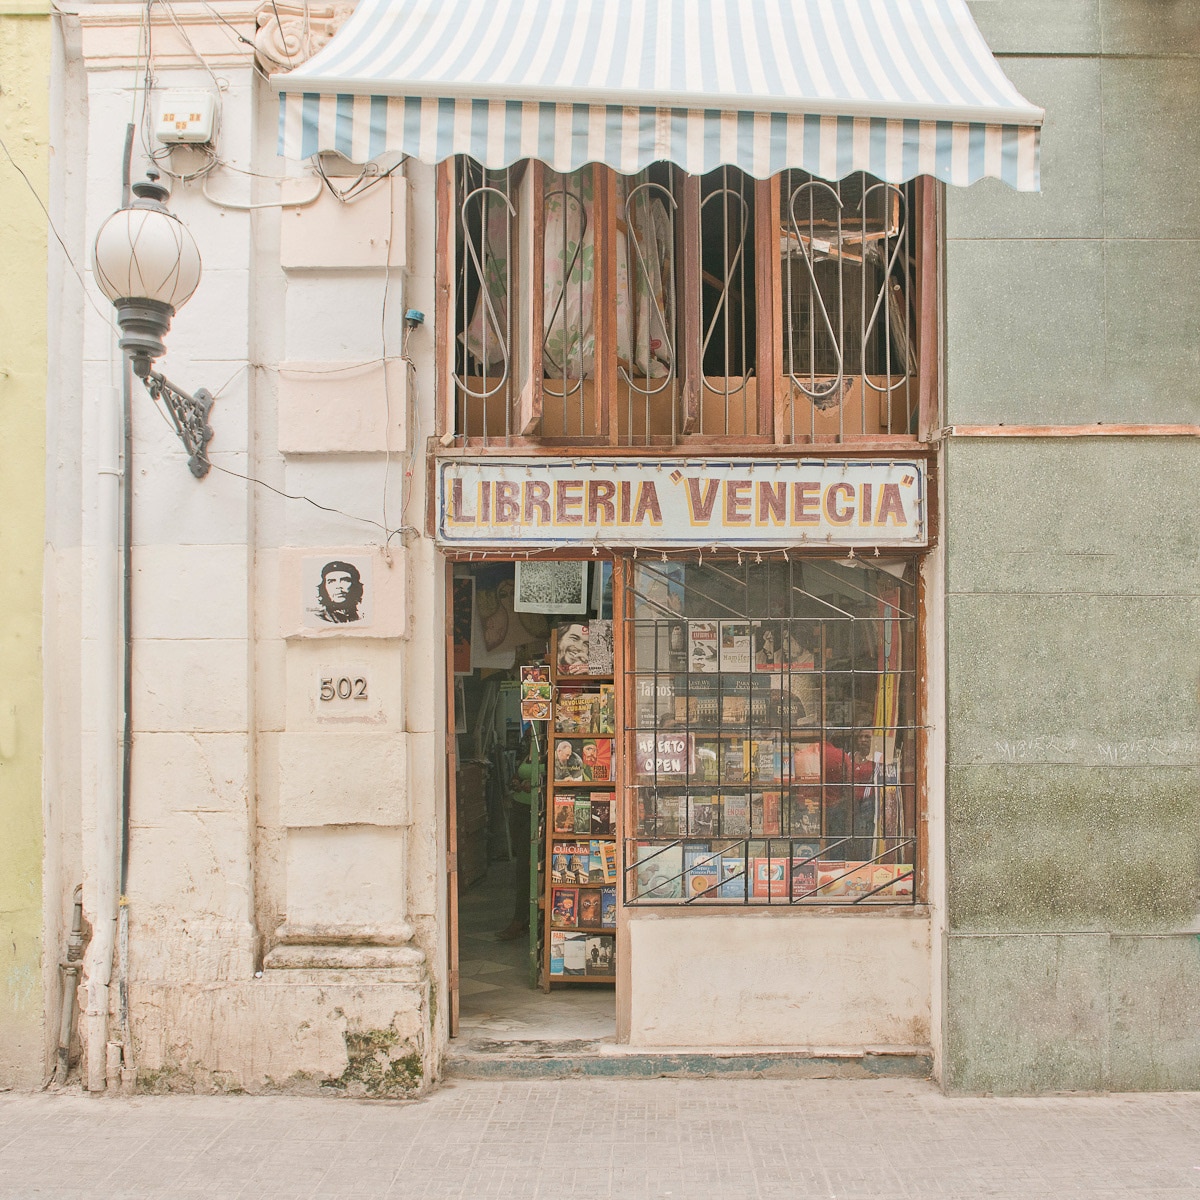 Travel Photography to Havana by Helene Havard